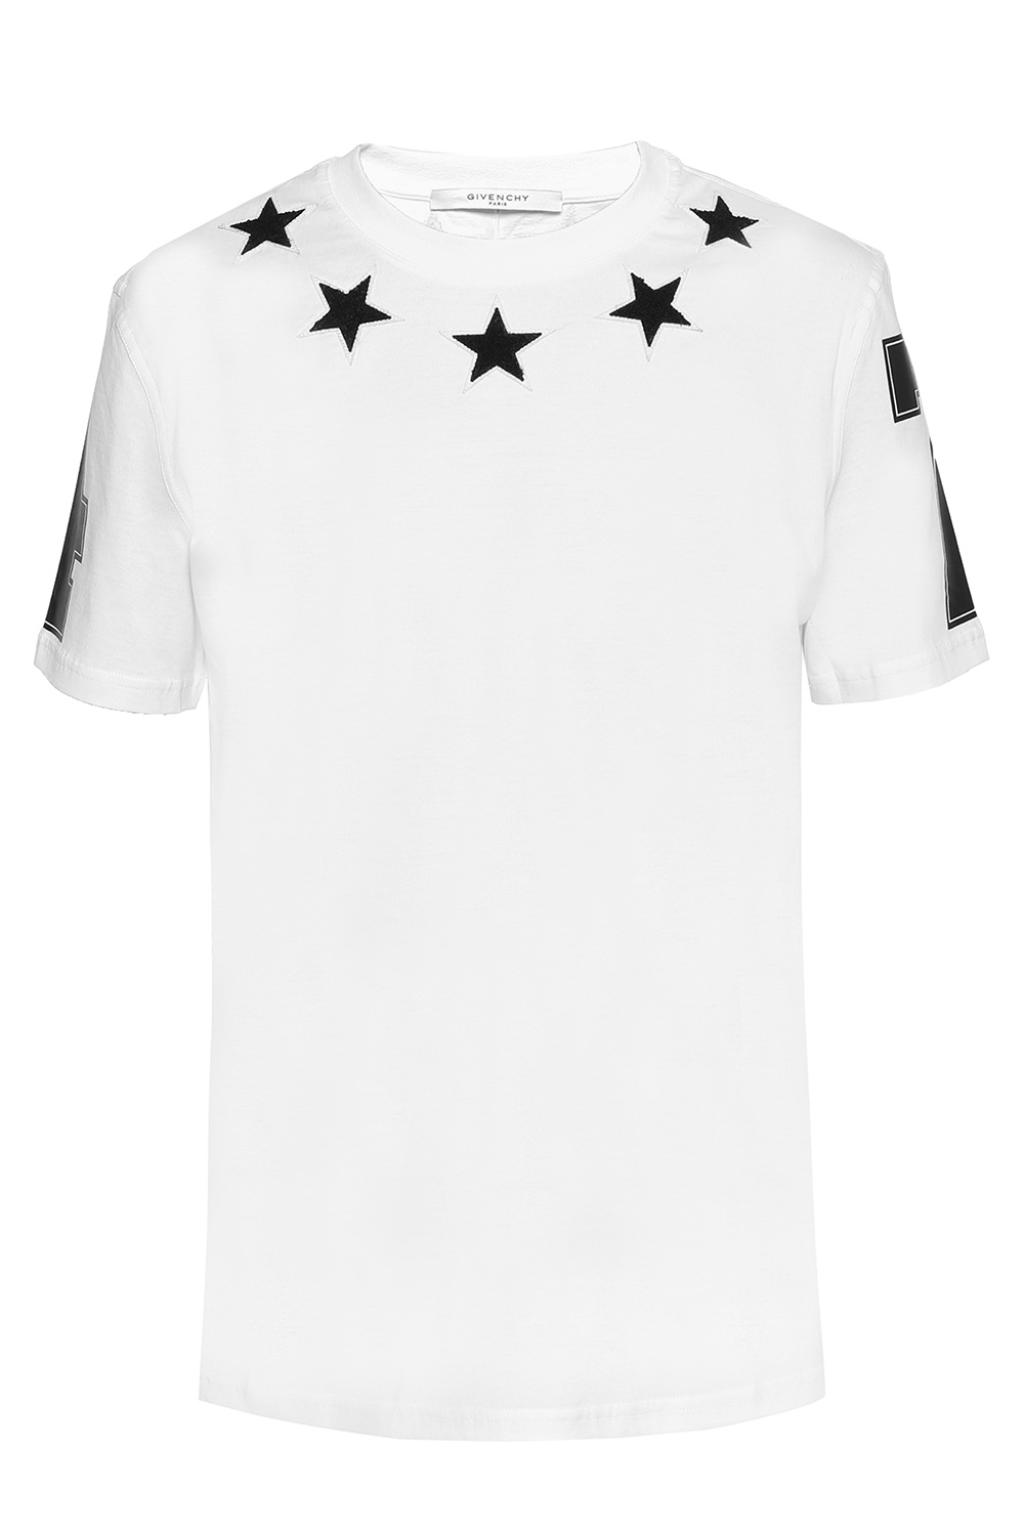 givenchy black shirt white stars